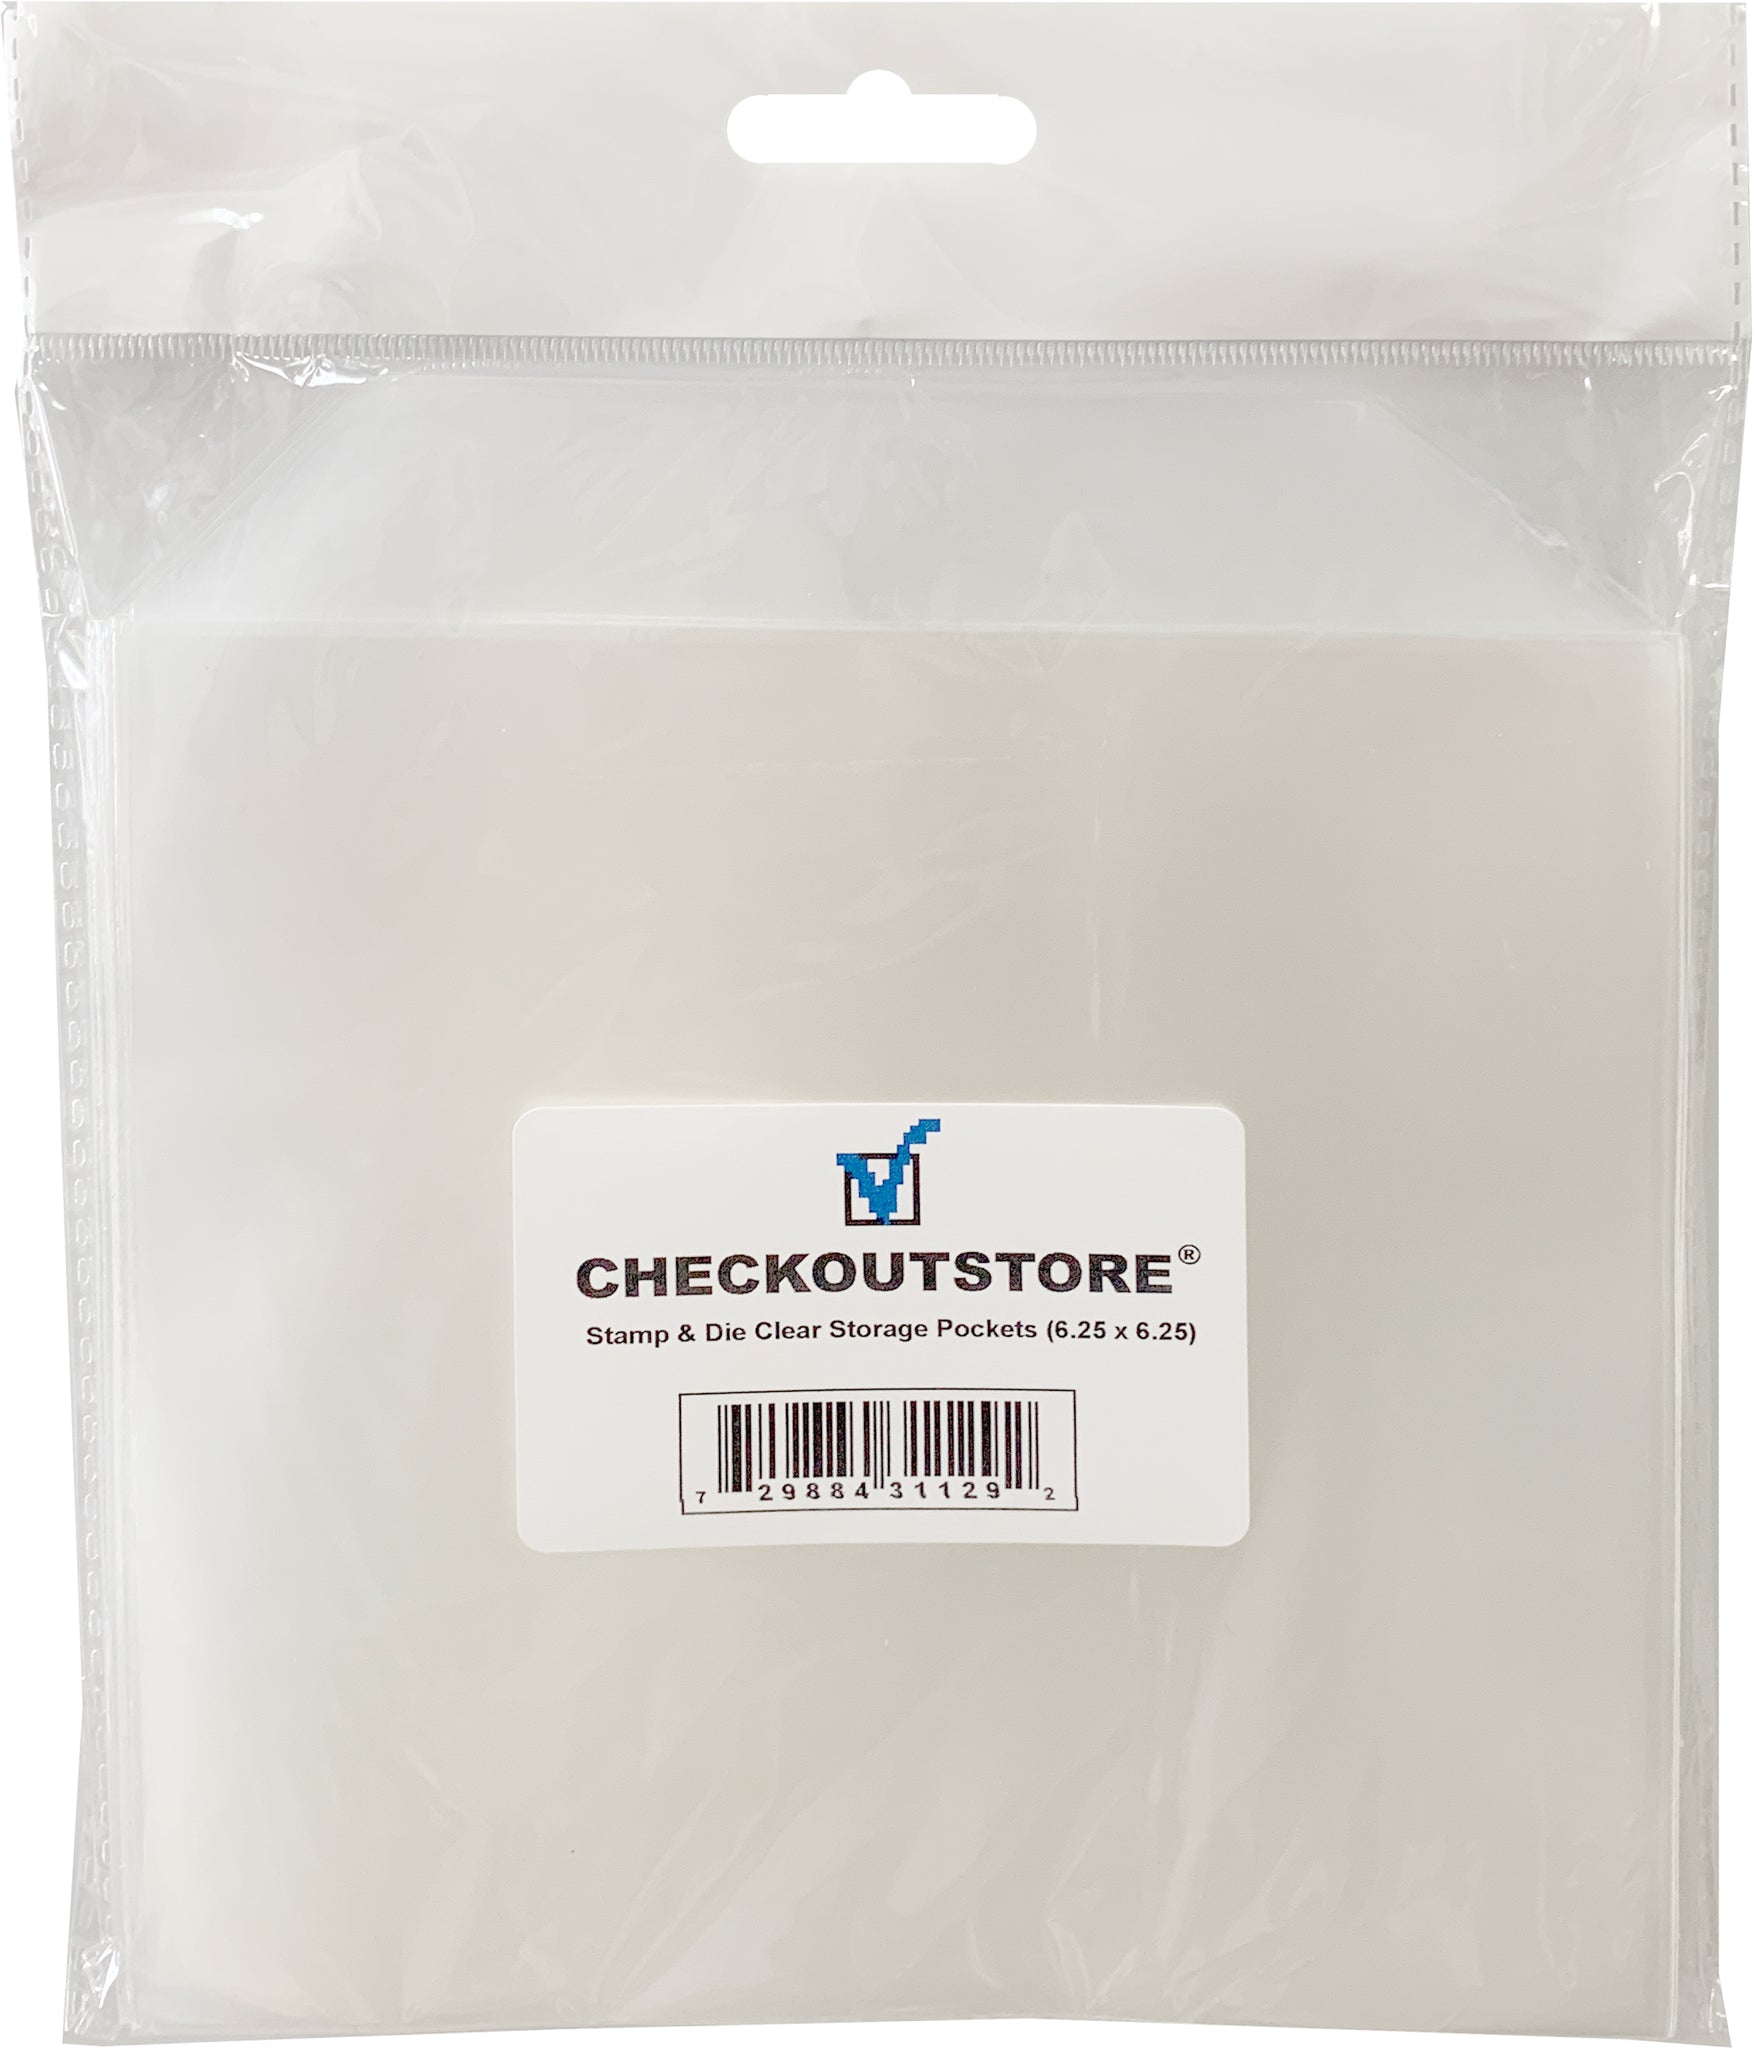 50 CheckOutStore® Clear Storage Pockets (6.25 x 6.25)